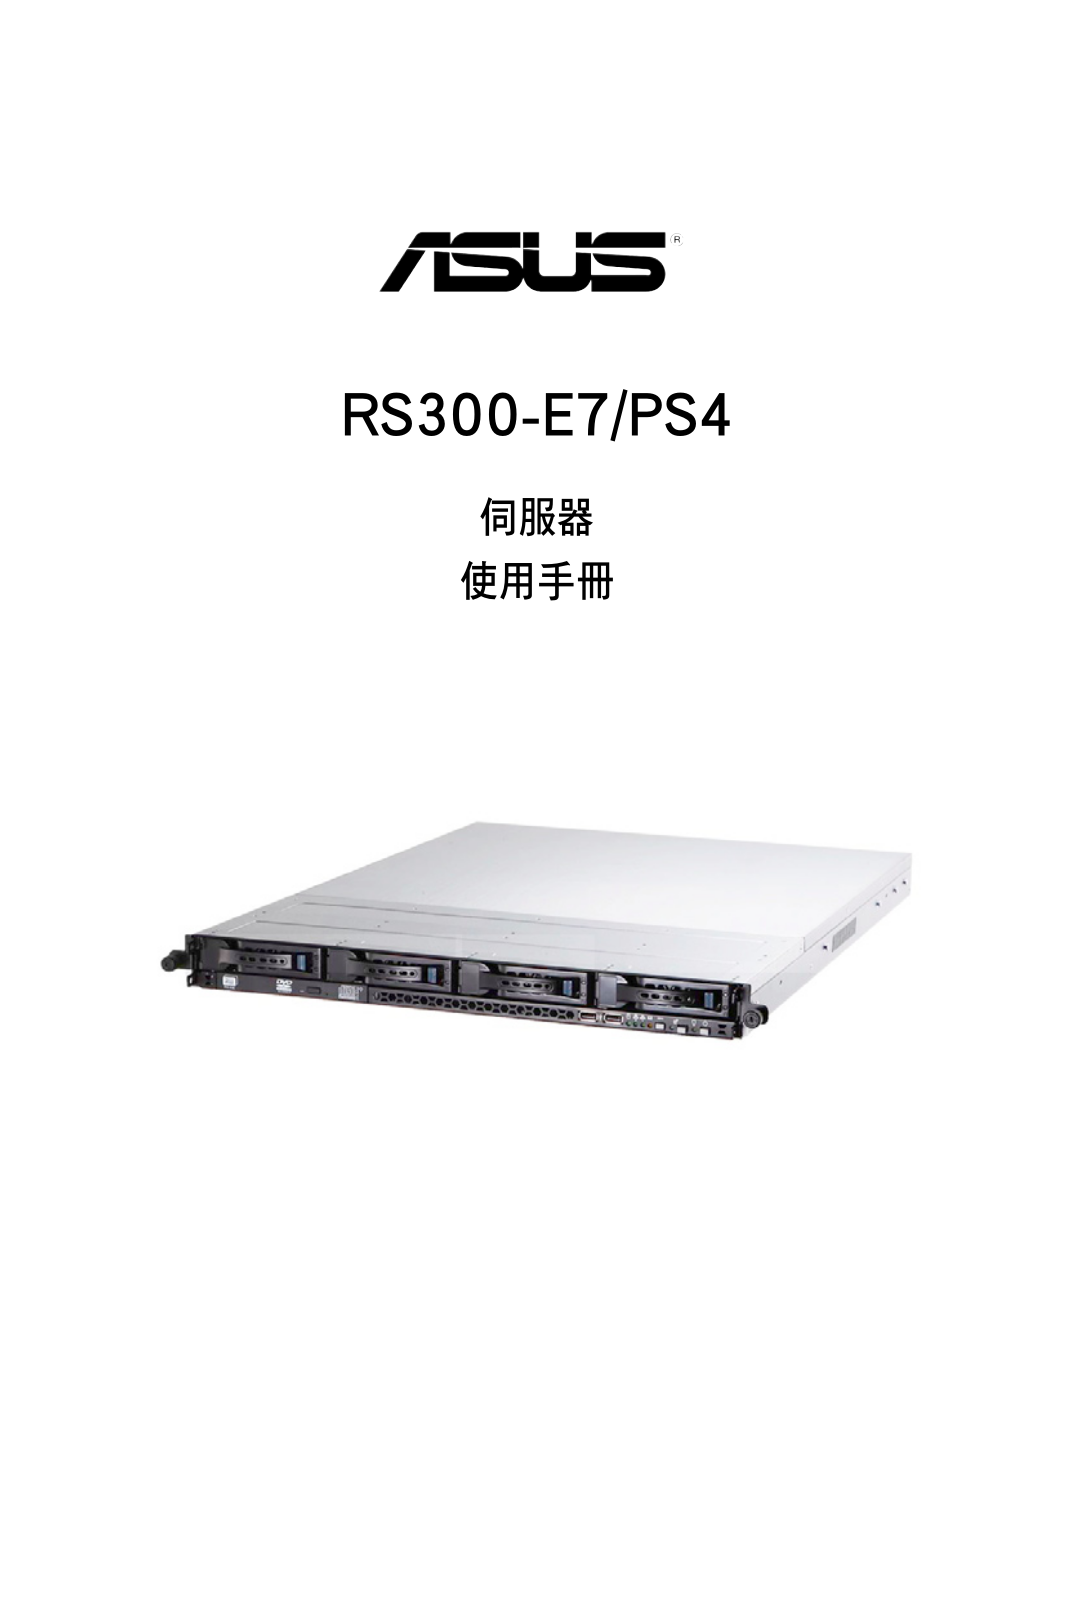 ASUS RS300-E7-PS4, T6289 User Manual